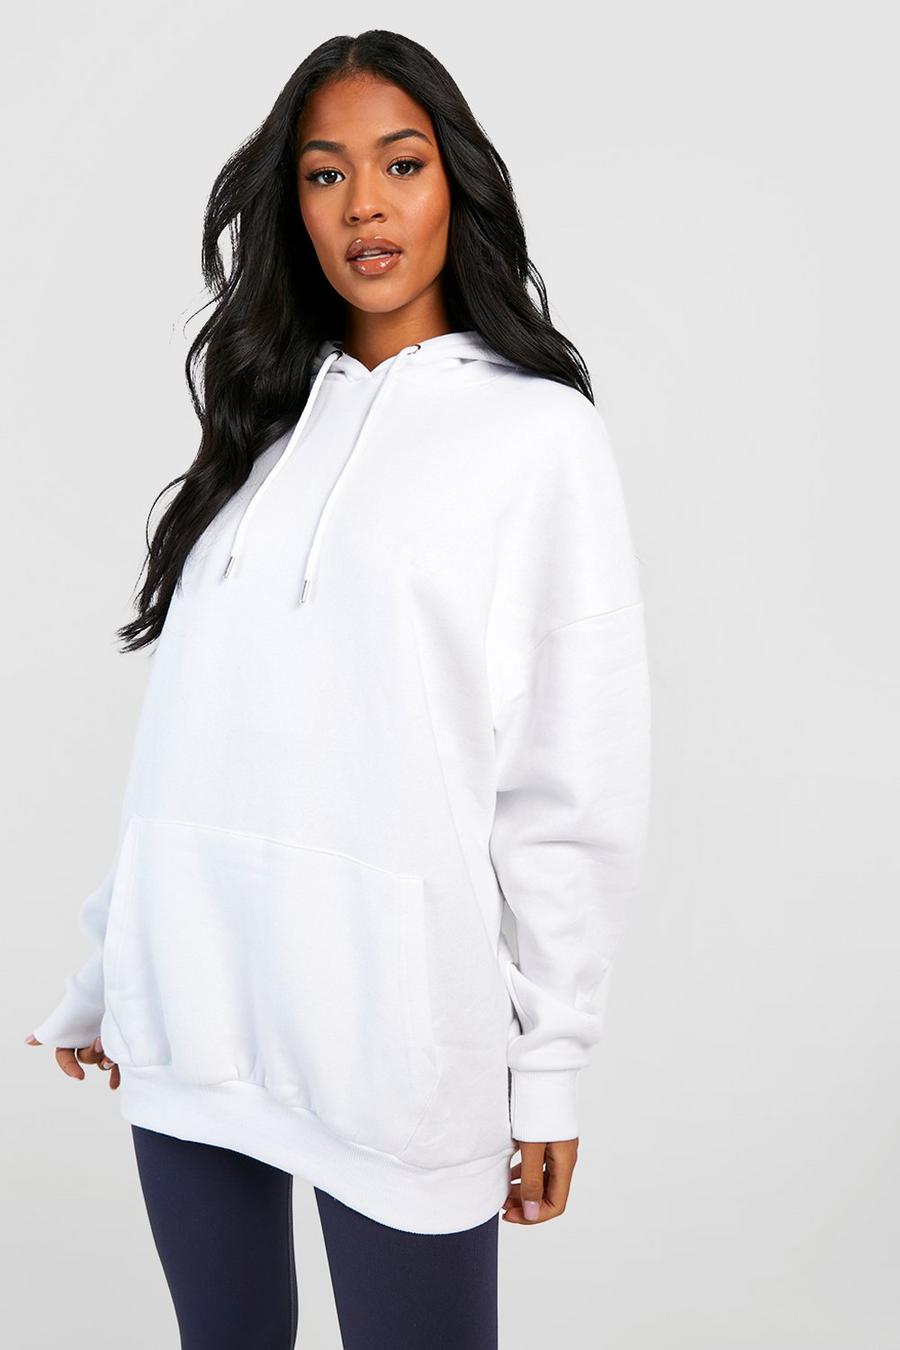 2023 Fashion Casual Brand Joma Hoodies Sweatshirt Men Women Fleece